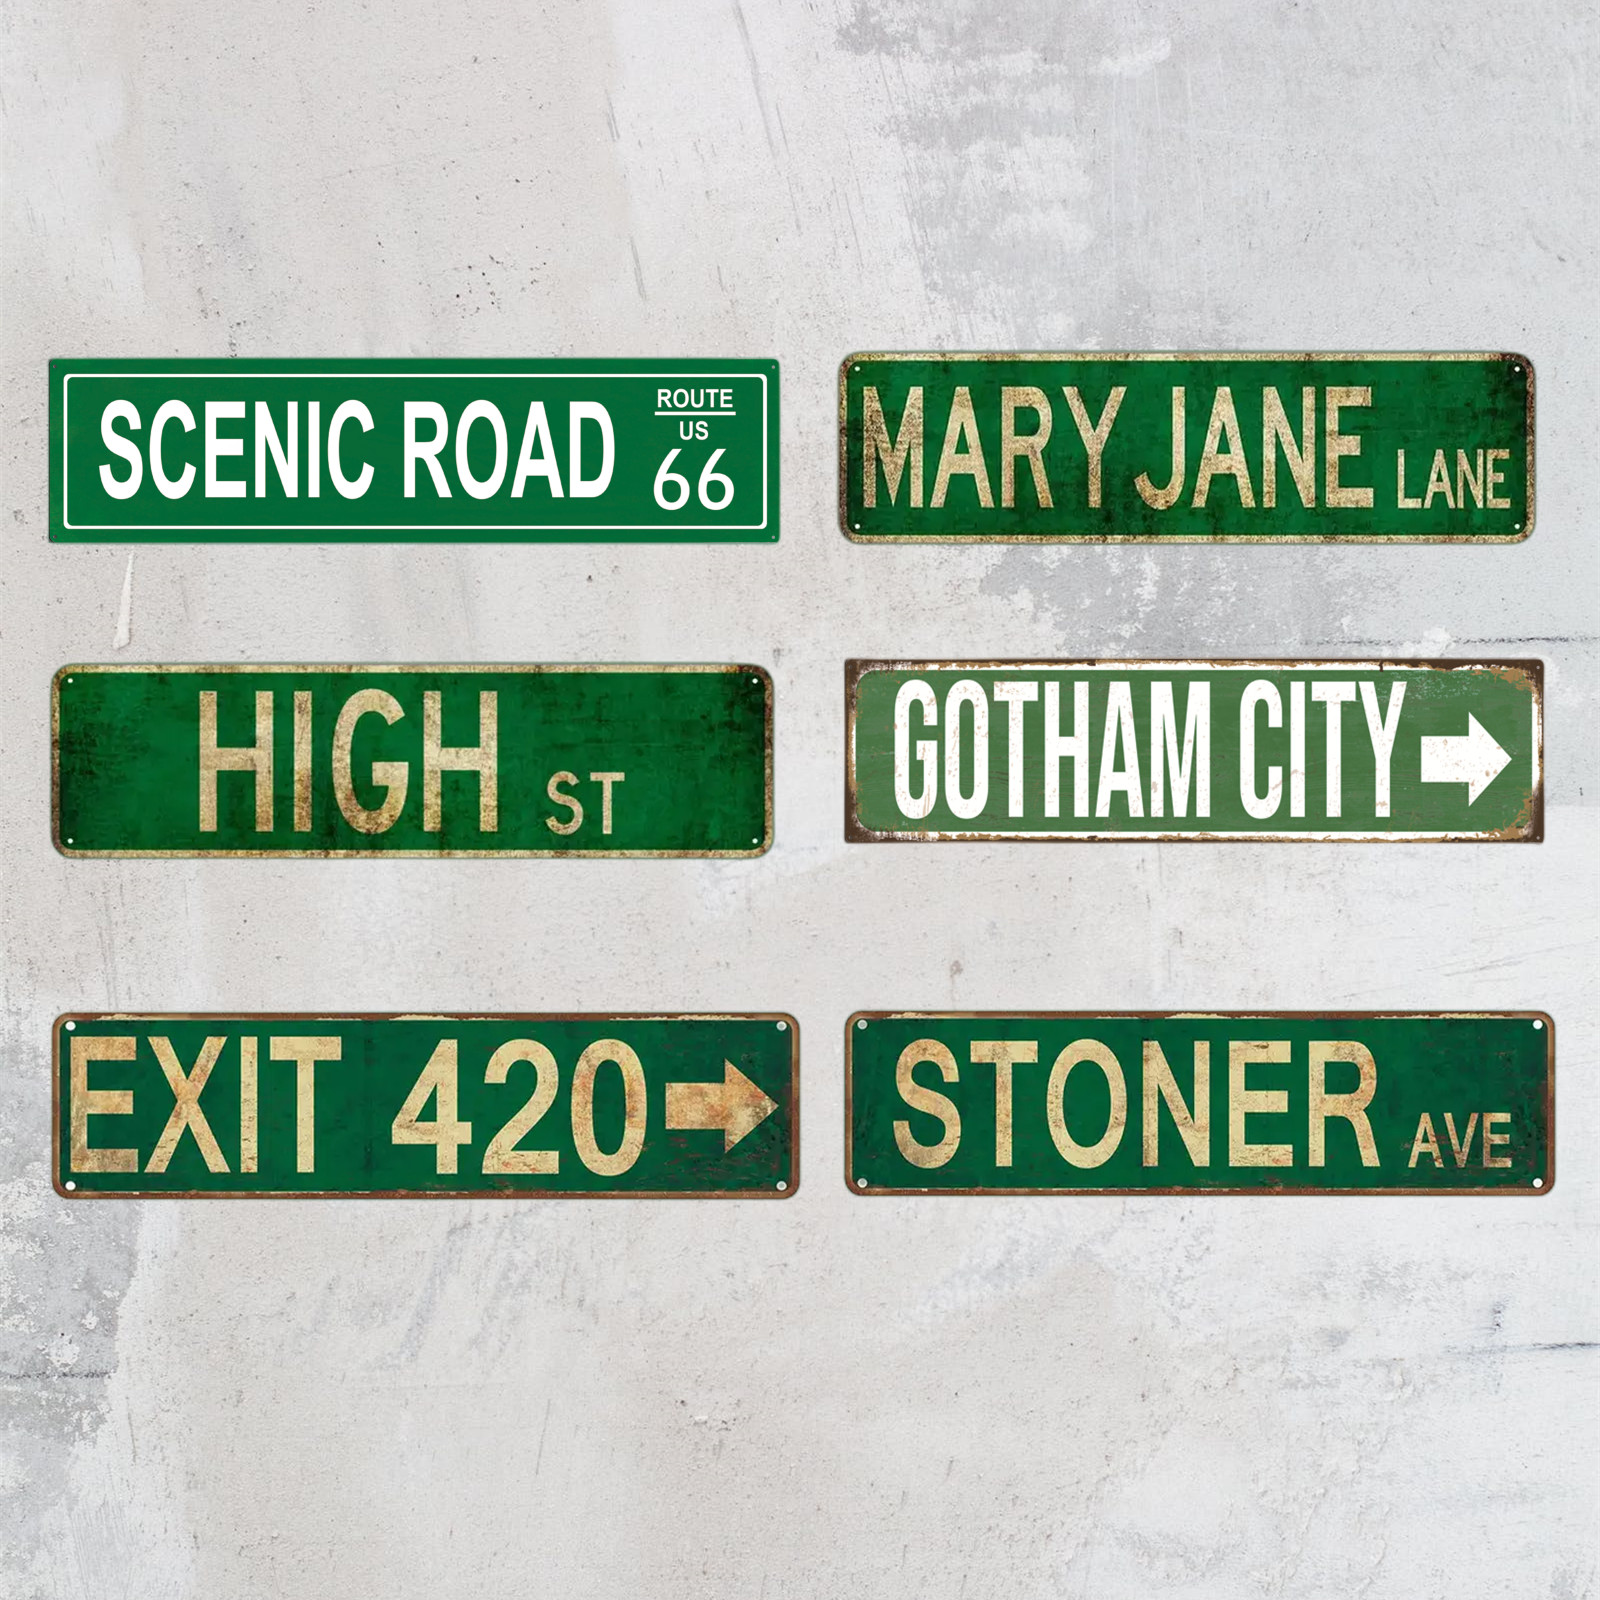 gotham city street signs